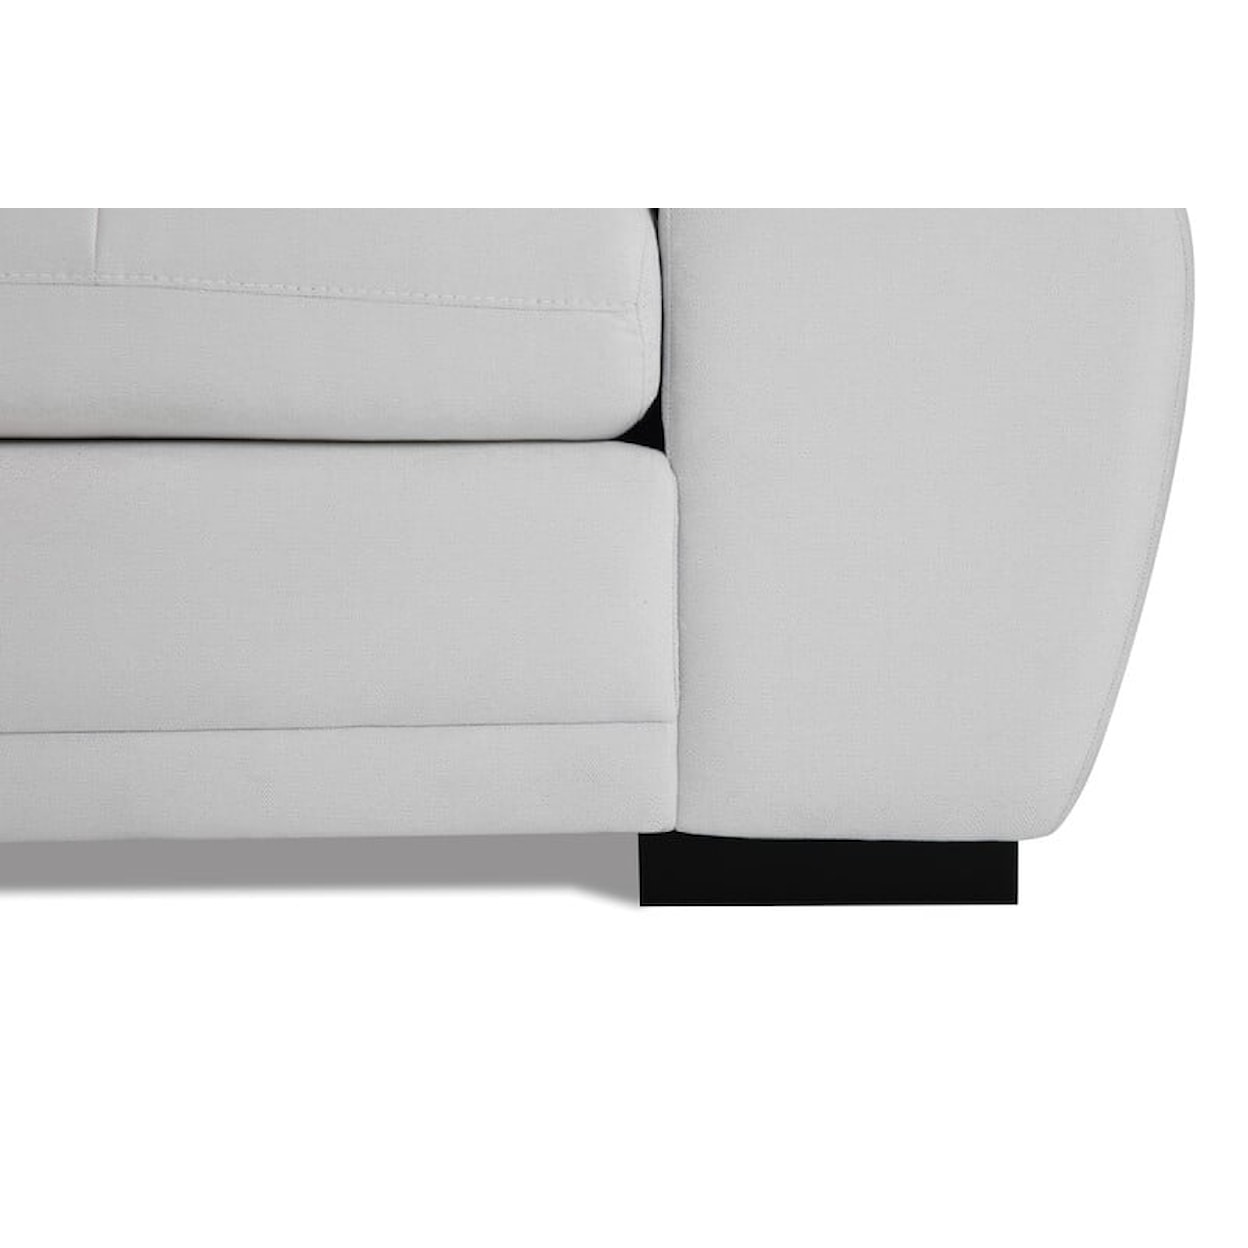 Palliser Sarasota Sarasota 6-Seat Sectional Sofa with Ottoman